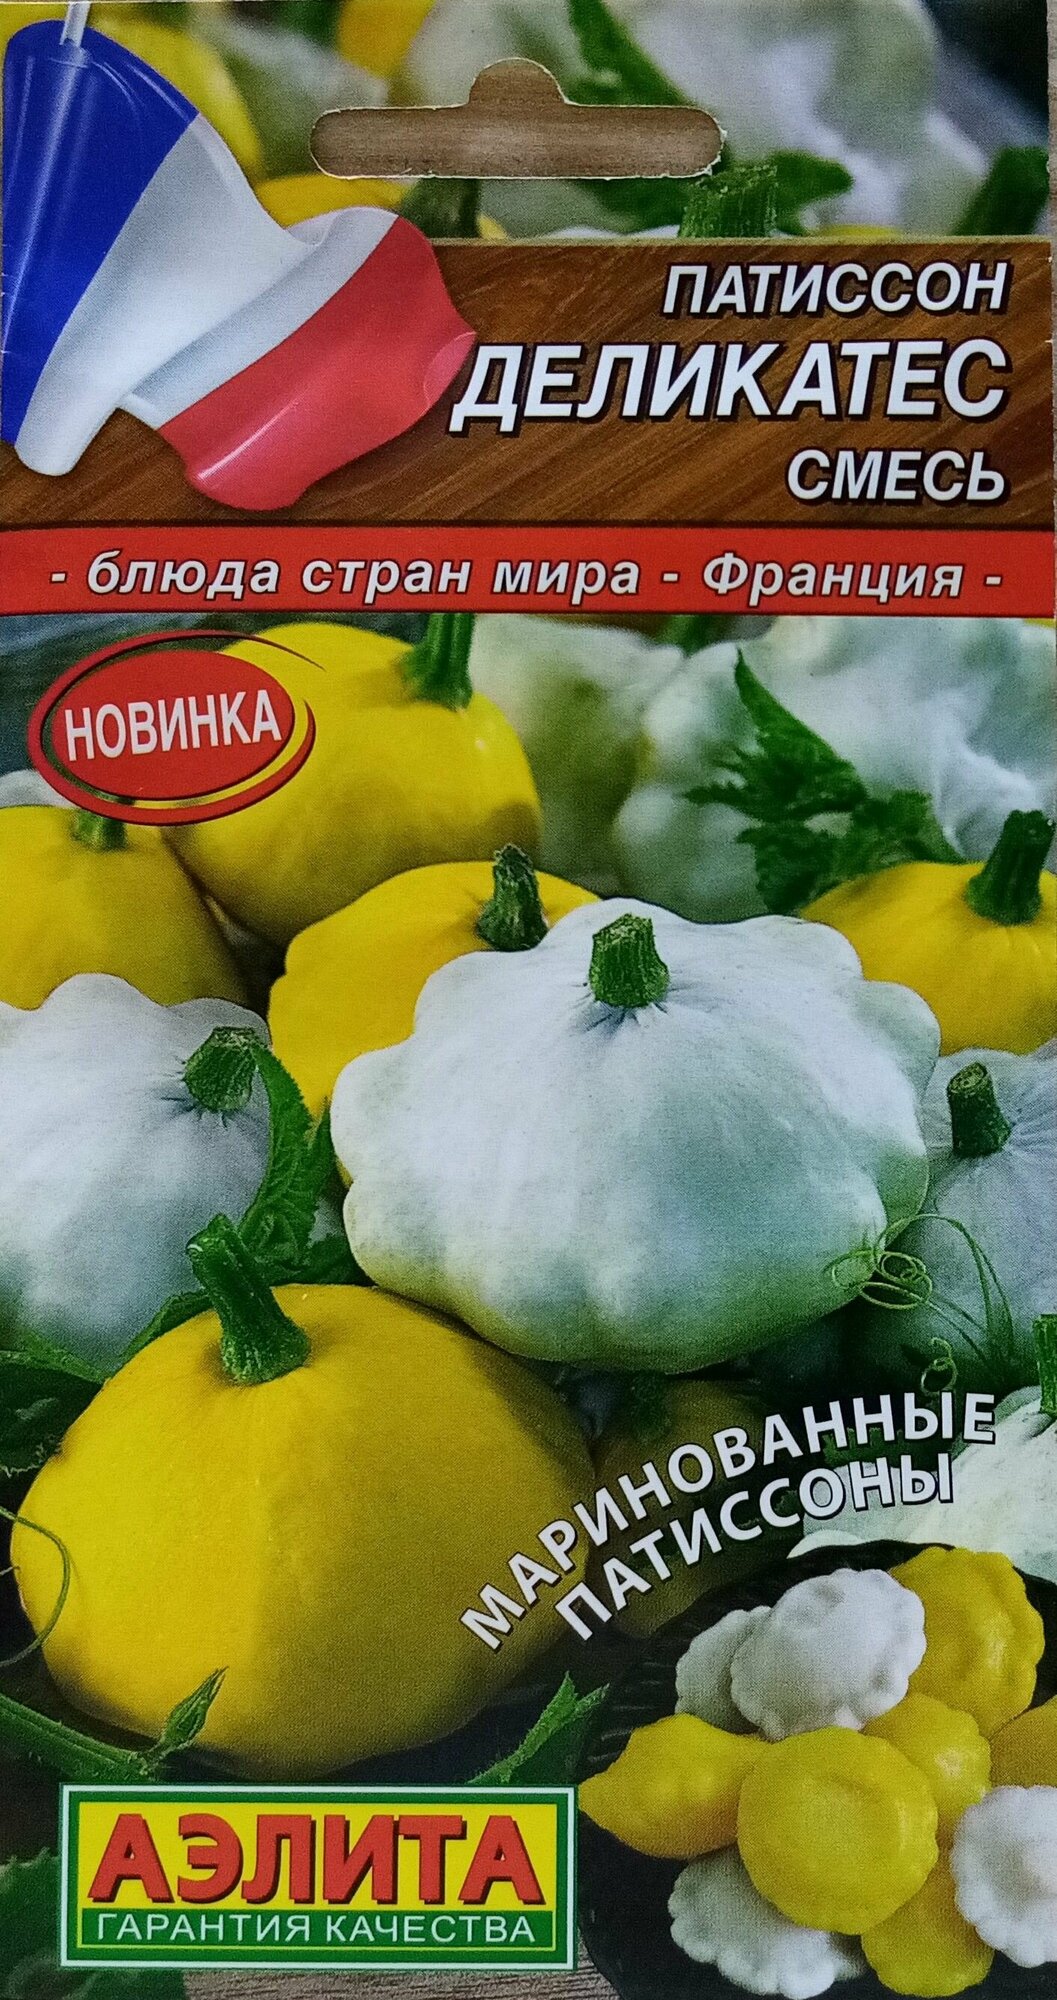 Семена овощей Патиссон Деликатес смесь (1 гр.)